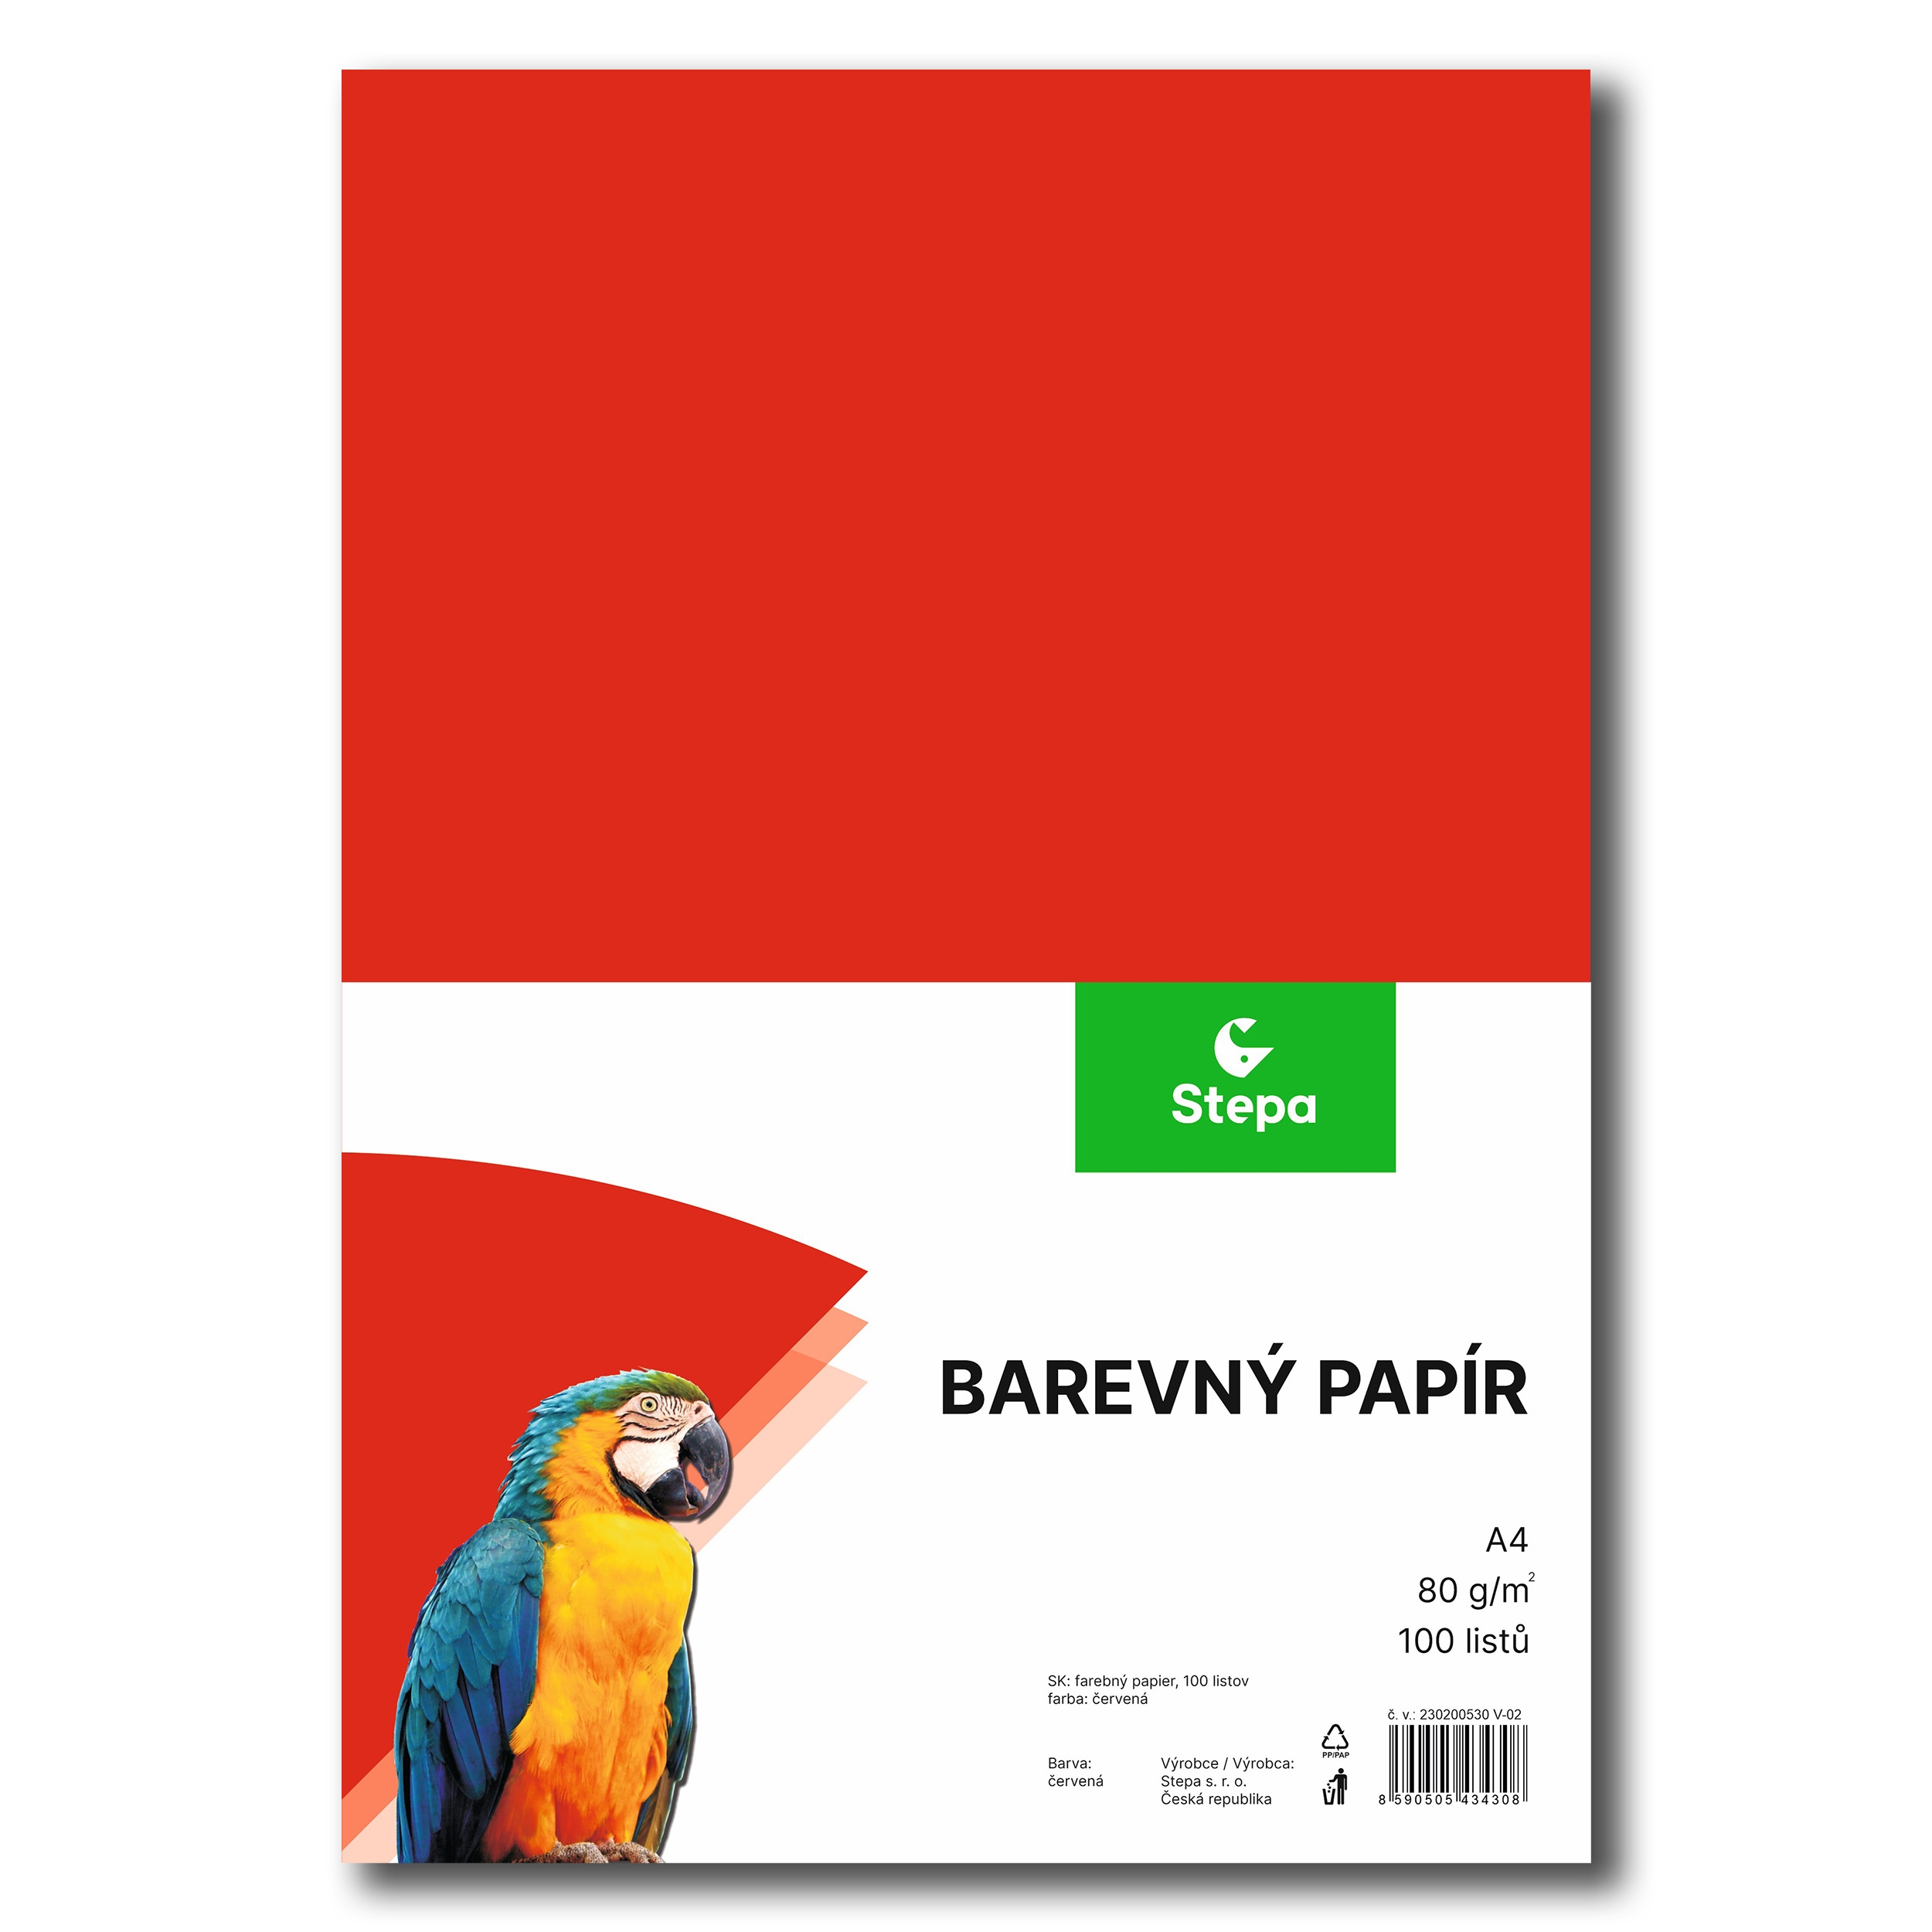 Barevný papír A4, 80g, červený, 100 listů